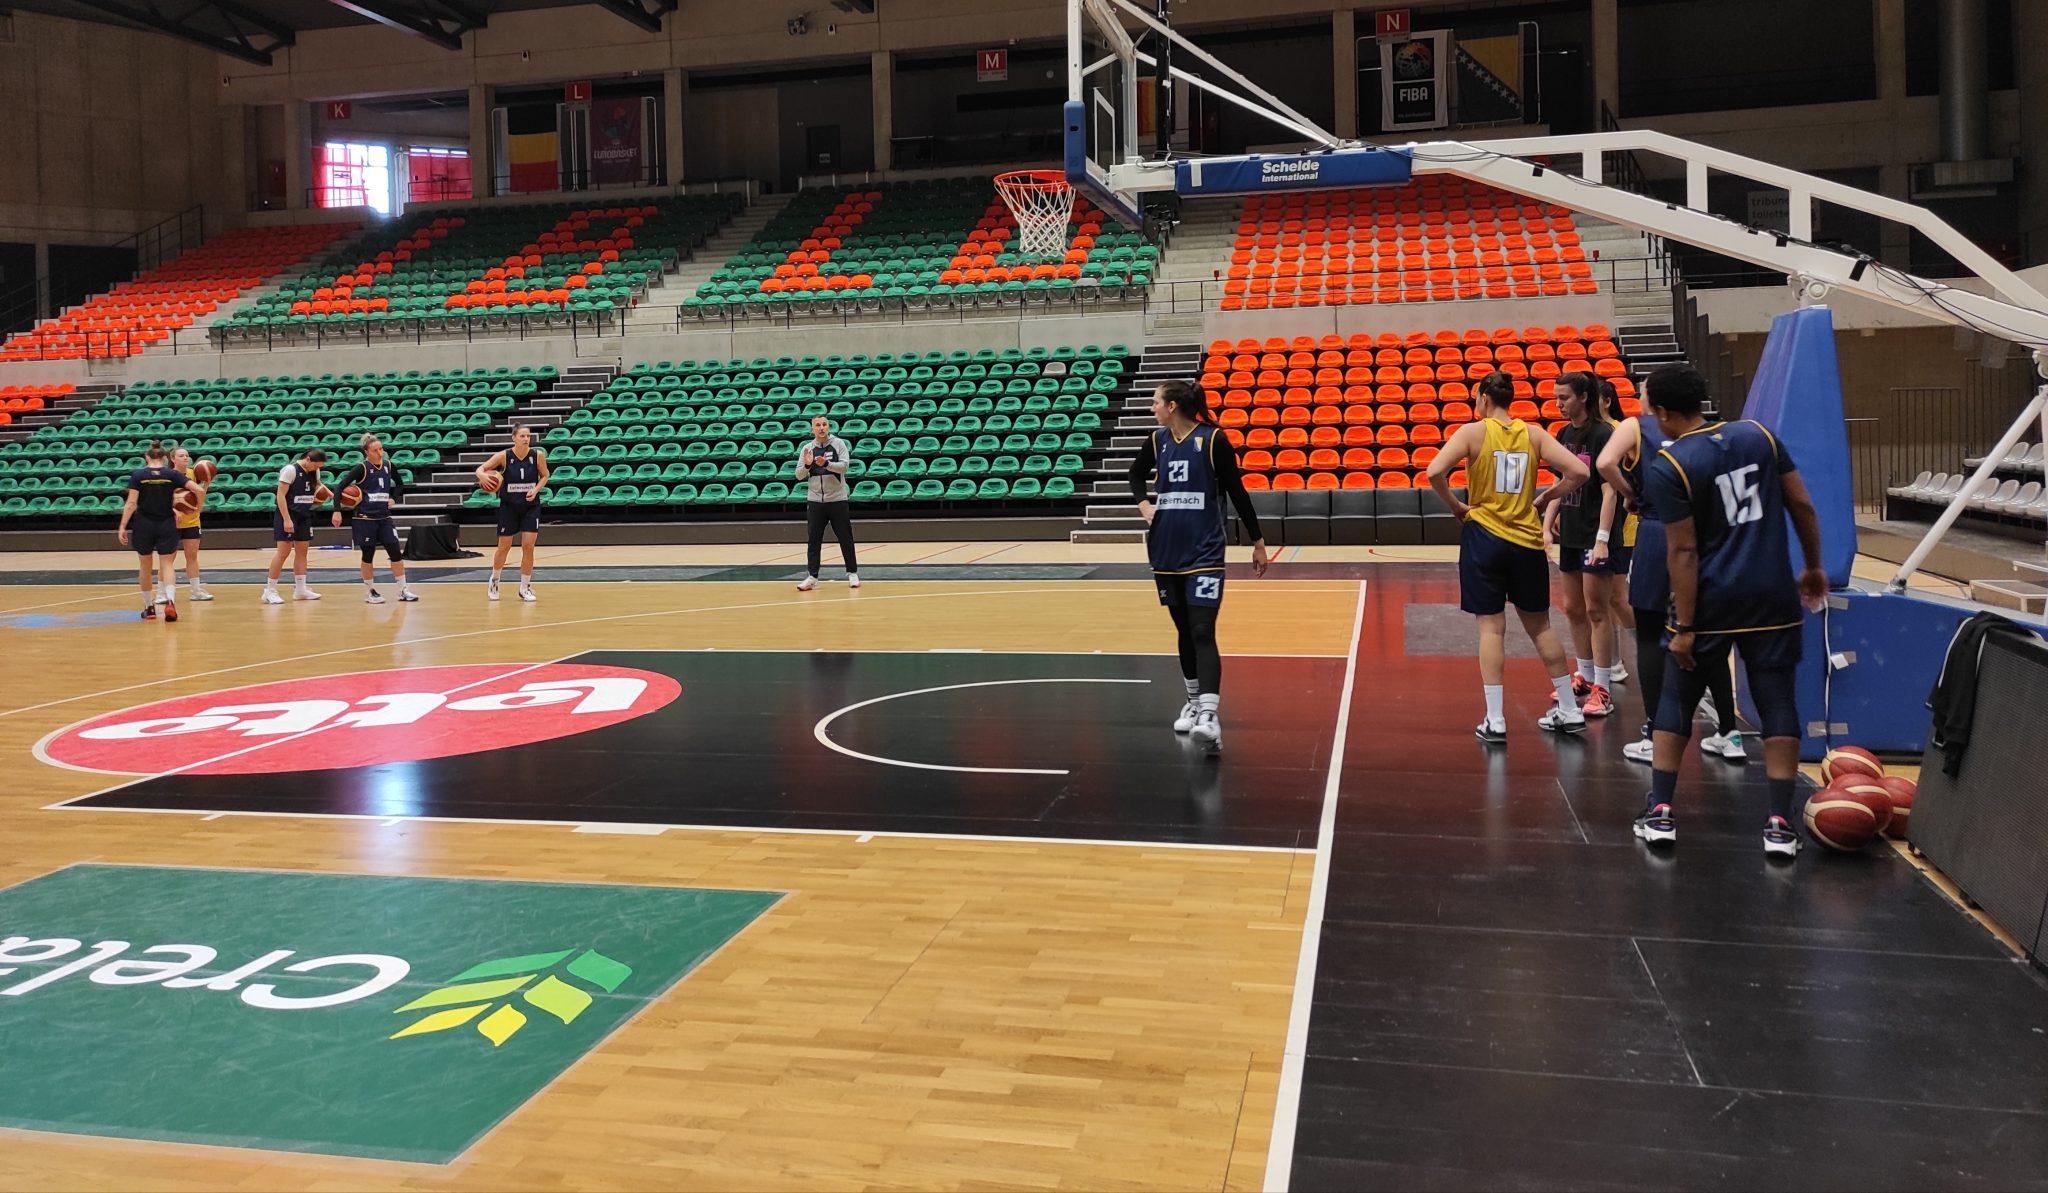 Bh. košarkašice se pripremaju za meč protiv Belgije, upitan nastup Dragane Zubac